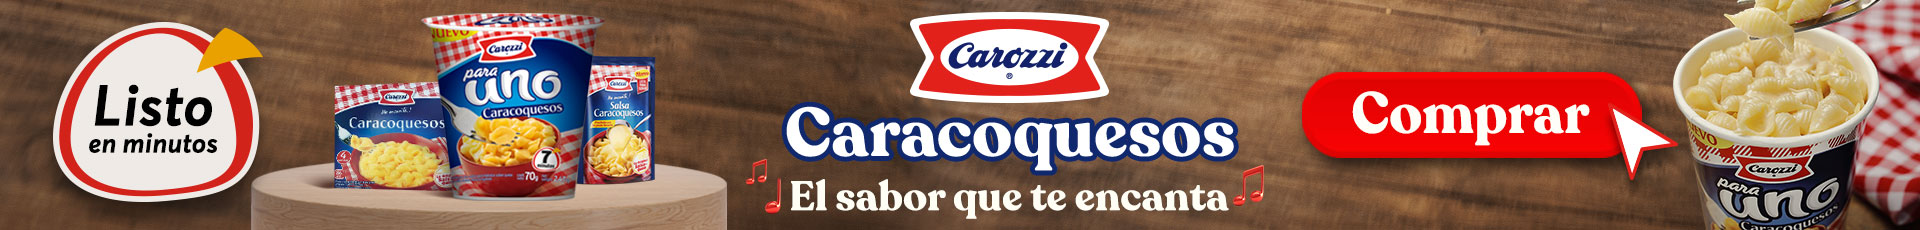 https://www.casarica.com.py/fideo-instantaneo-carozzi?utm_source=Web&utm_medium=Banner_A1&utm_campaign=Carozzi_Fideo_Instantaneo&utm_id=Fideo_Instantaneo&utm_term=Posicion&utm_content=A1m.py%2Fgranola-vivo-check-cacao-360-gr-p35371%25